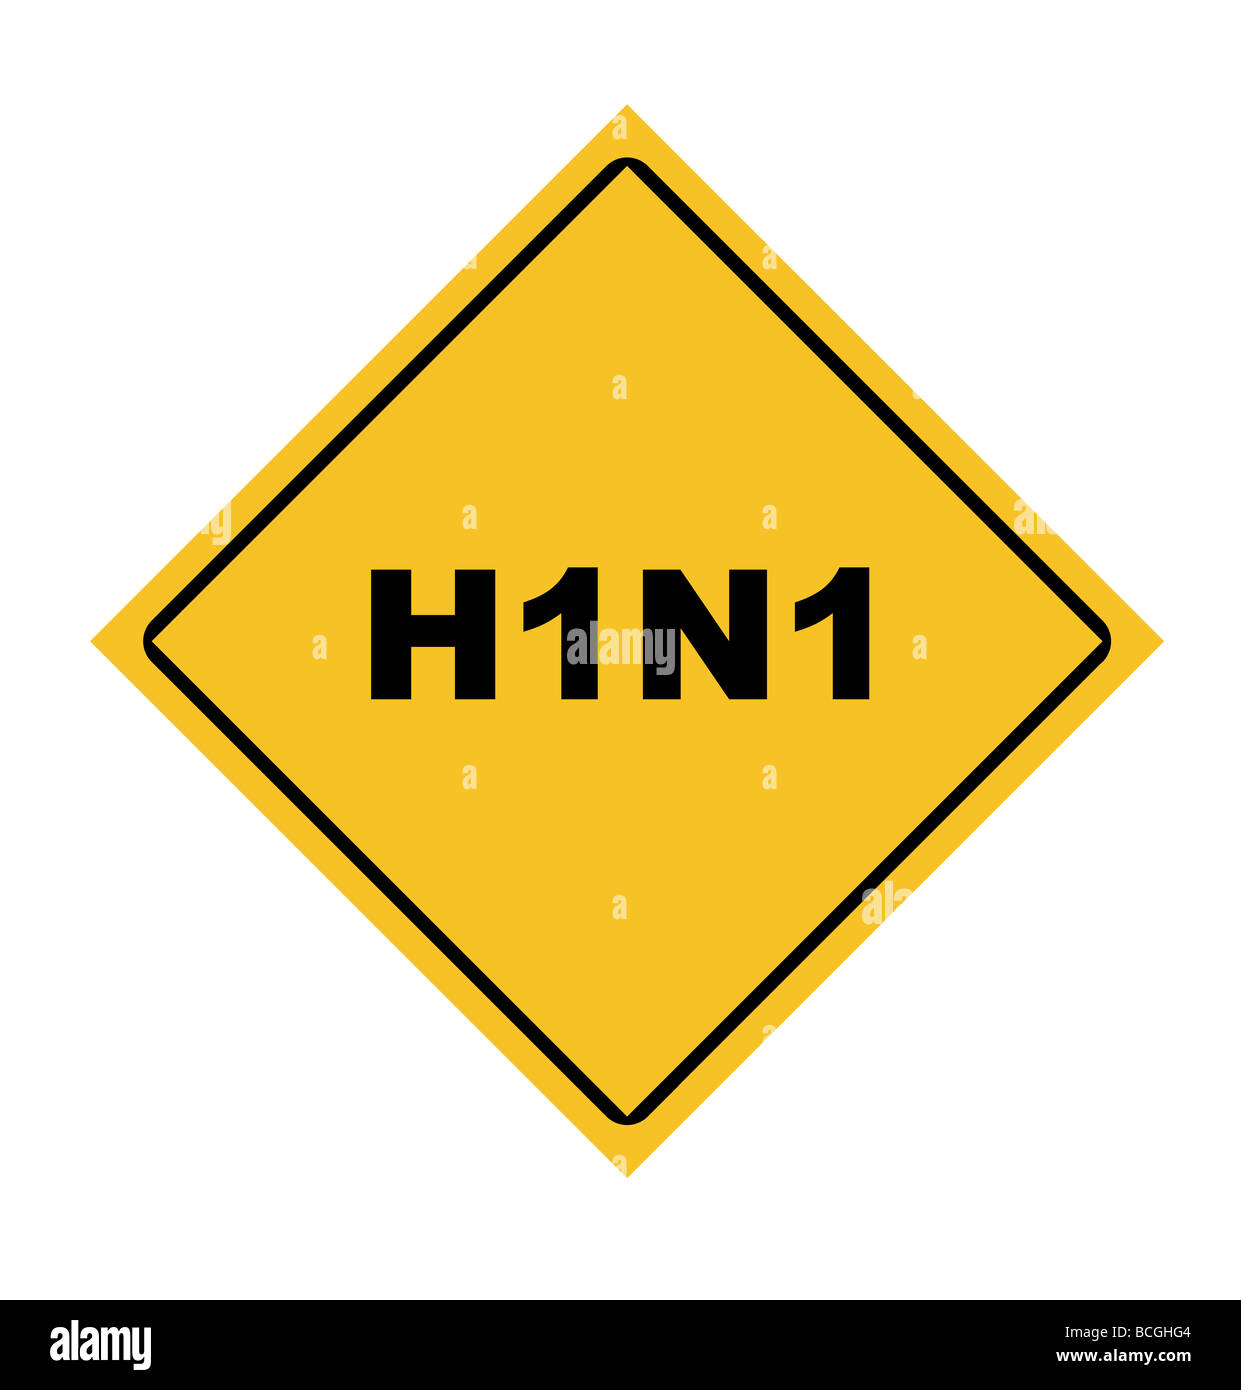 H1N1 swine flu sign isolated on white background Stock Photo